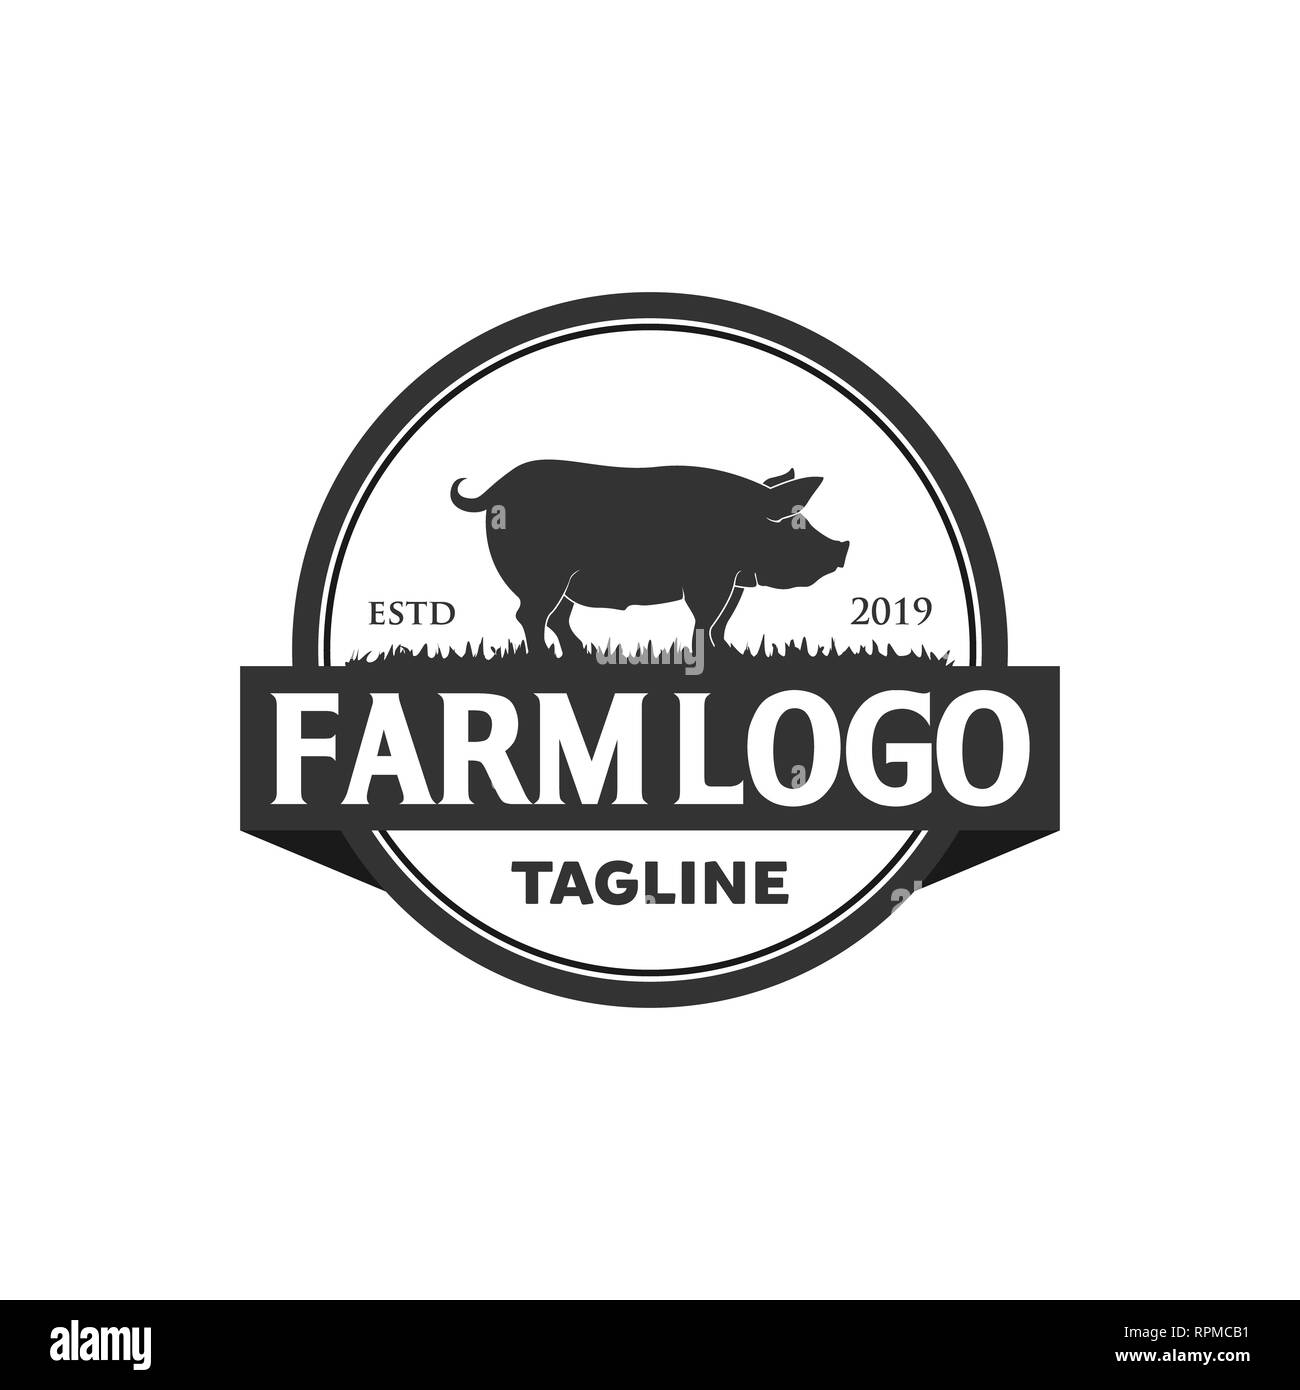 vintage farm house logo designs with pig symbol Stock Photo